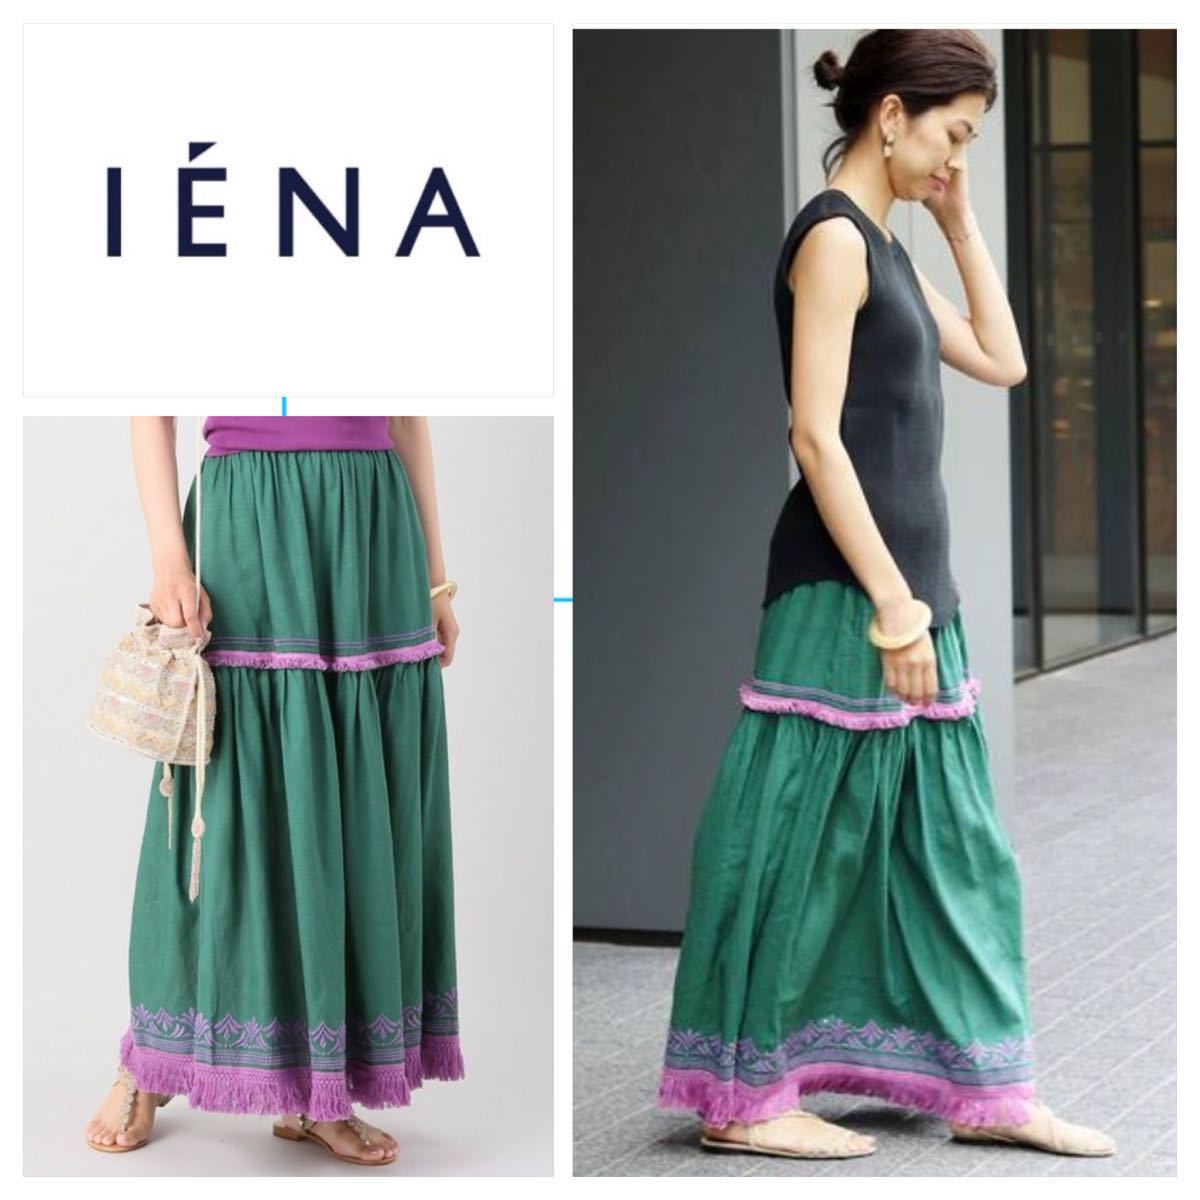  new goods Iena IENA LA BOUCLE embroidery gathered skirt 36 flax linen long skirt fringe regular price 18,700 jpy 20828